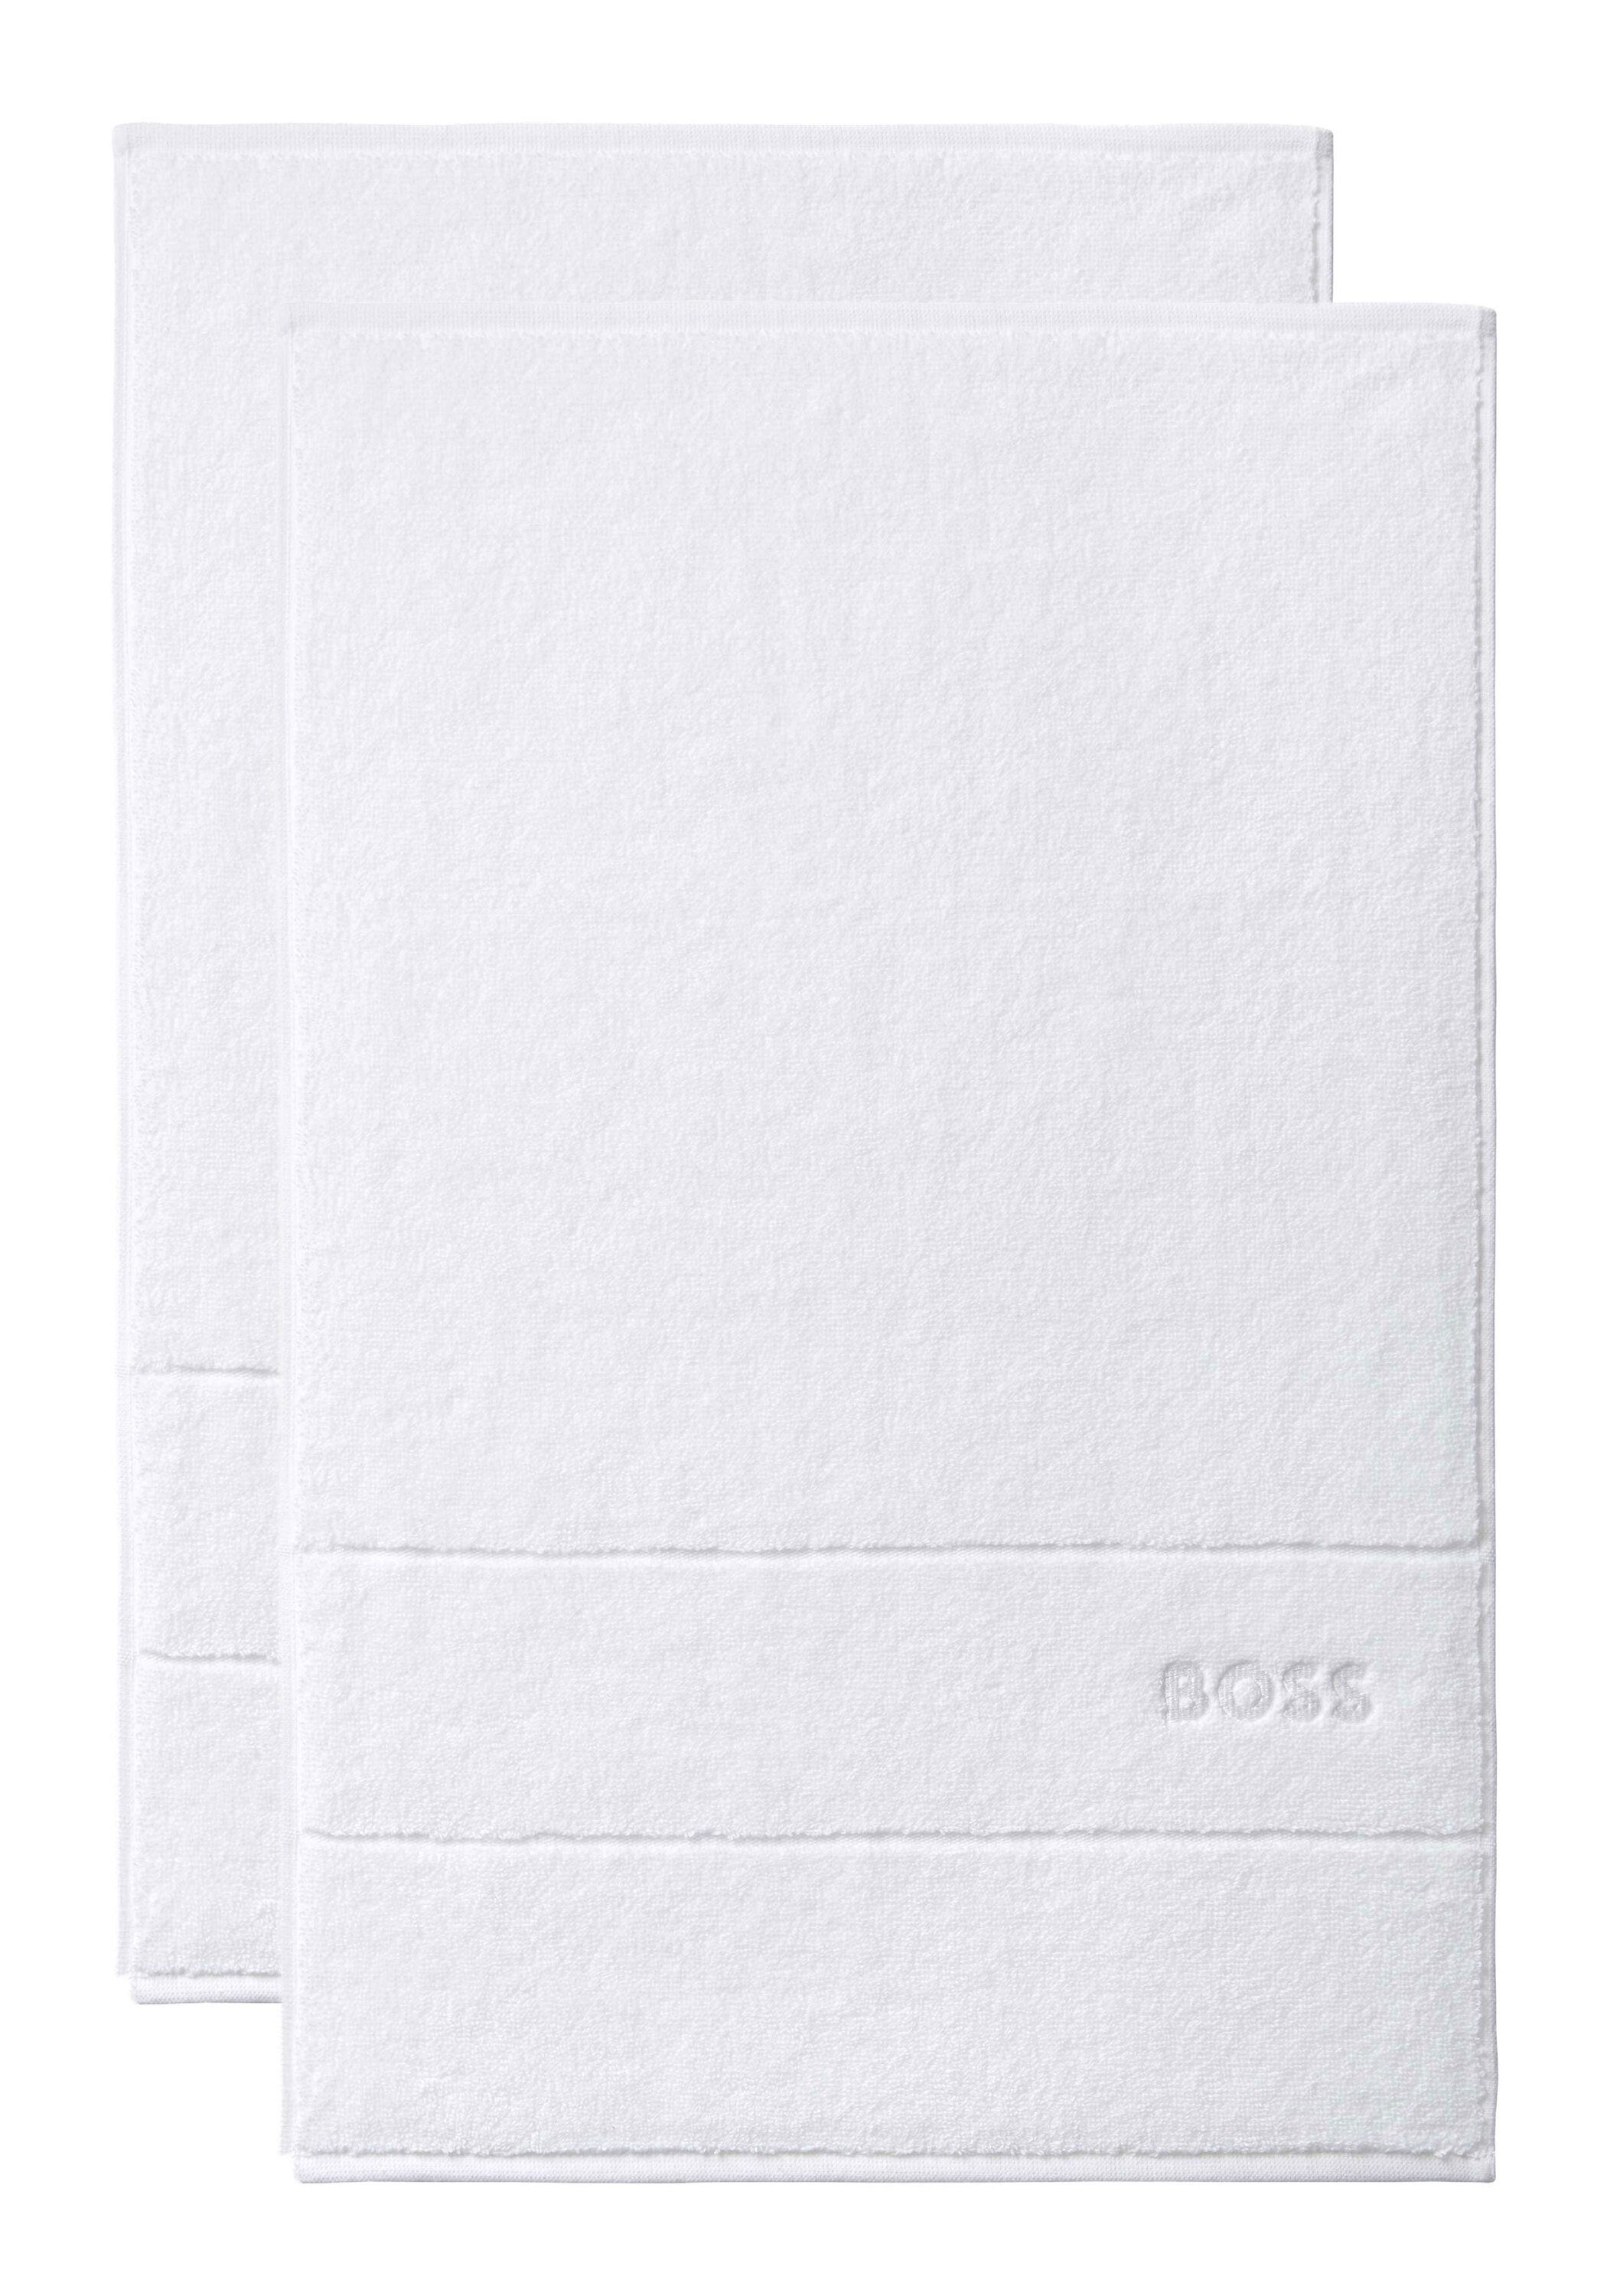 Hugo Boss Home Gästehandtücher PLAIN (2tlg), 100% Baumwolle, mit modernem Design ICEN | Gästehandtücher